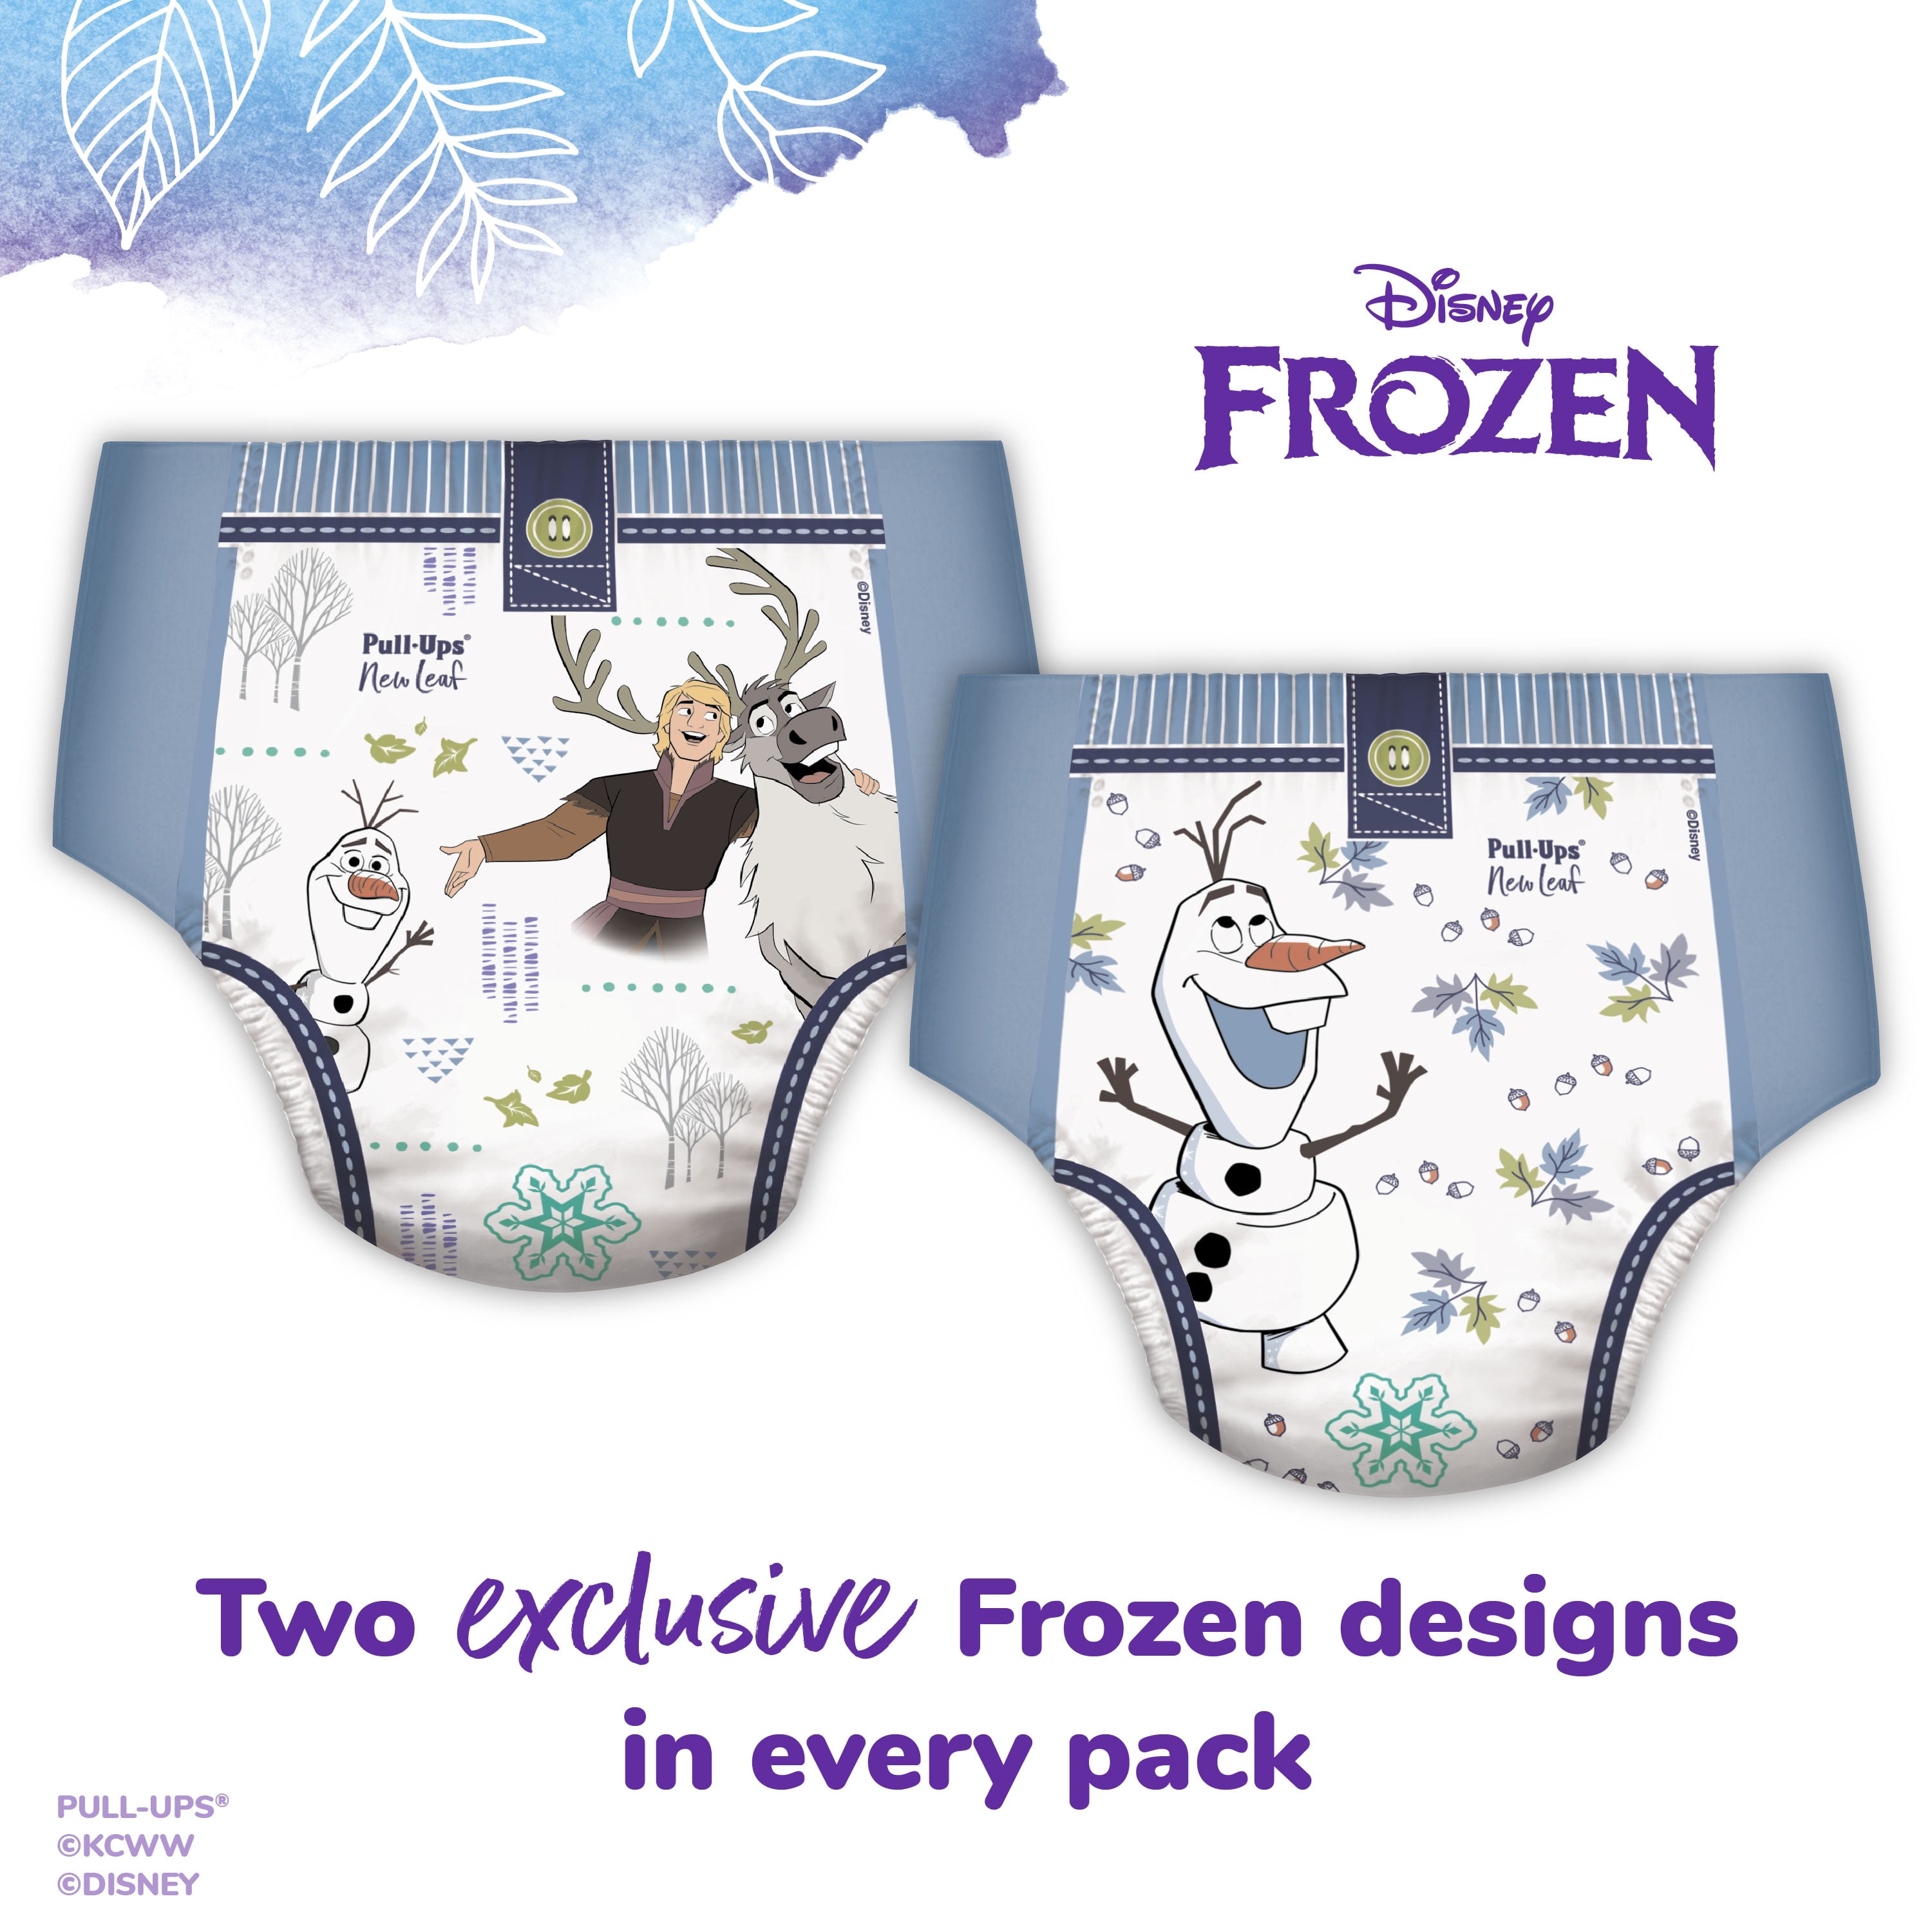 Pull-Ups New Leaf Boys' Disney Frozen Potty Training Pants, 2T-3T